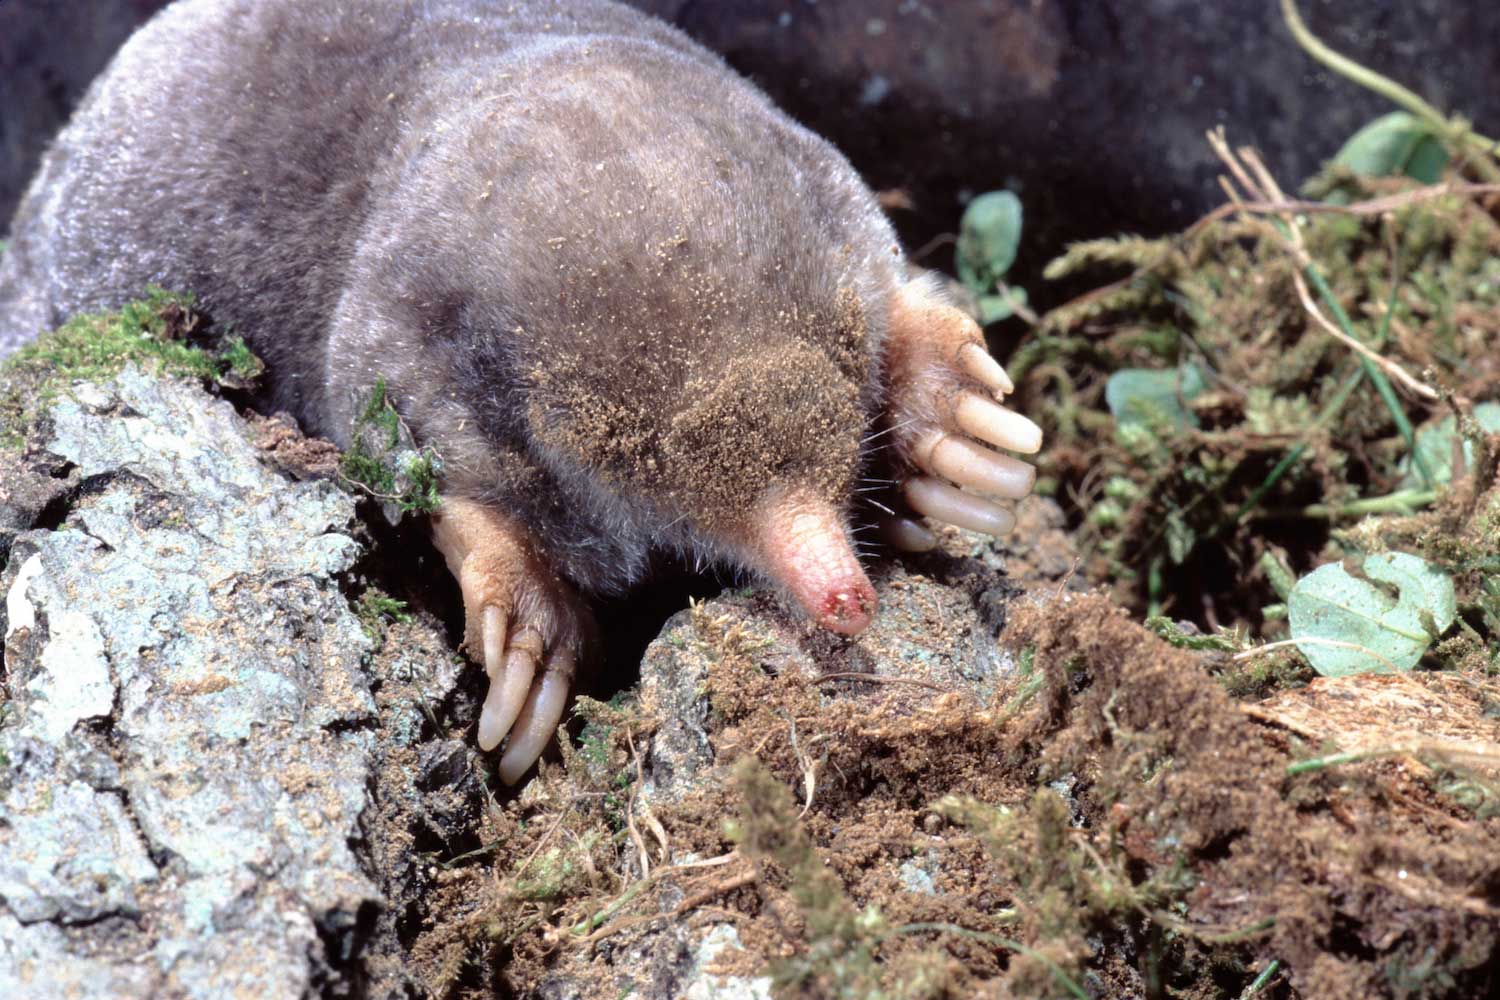 An eastern mole on the ground.